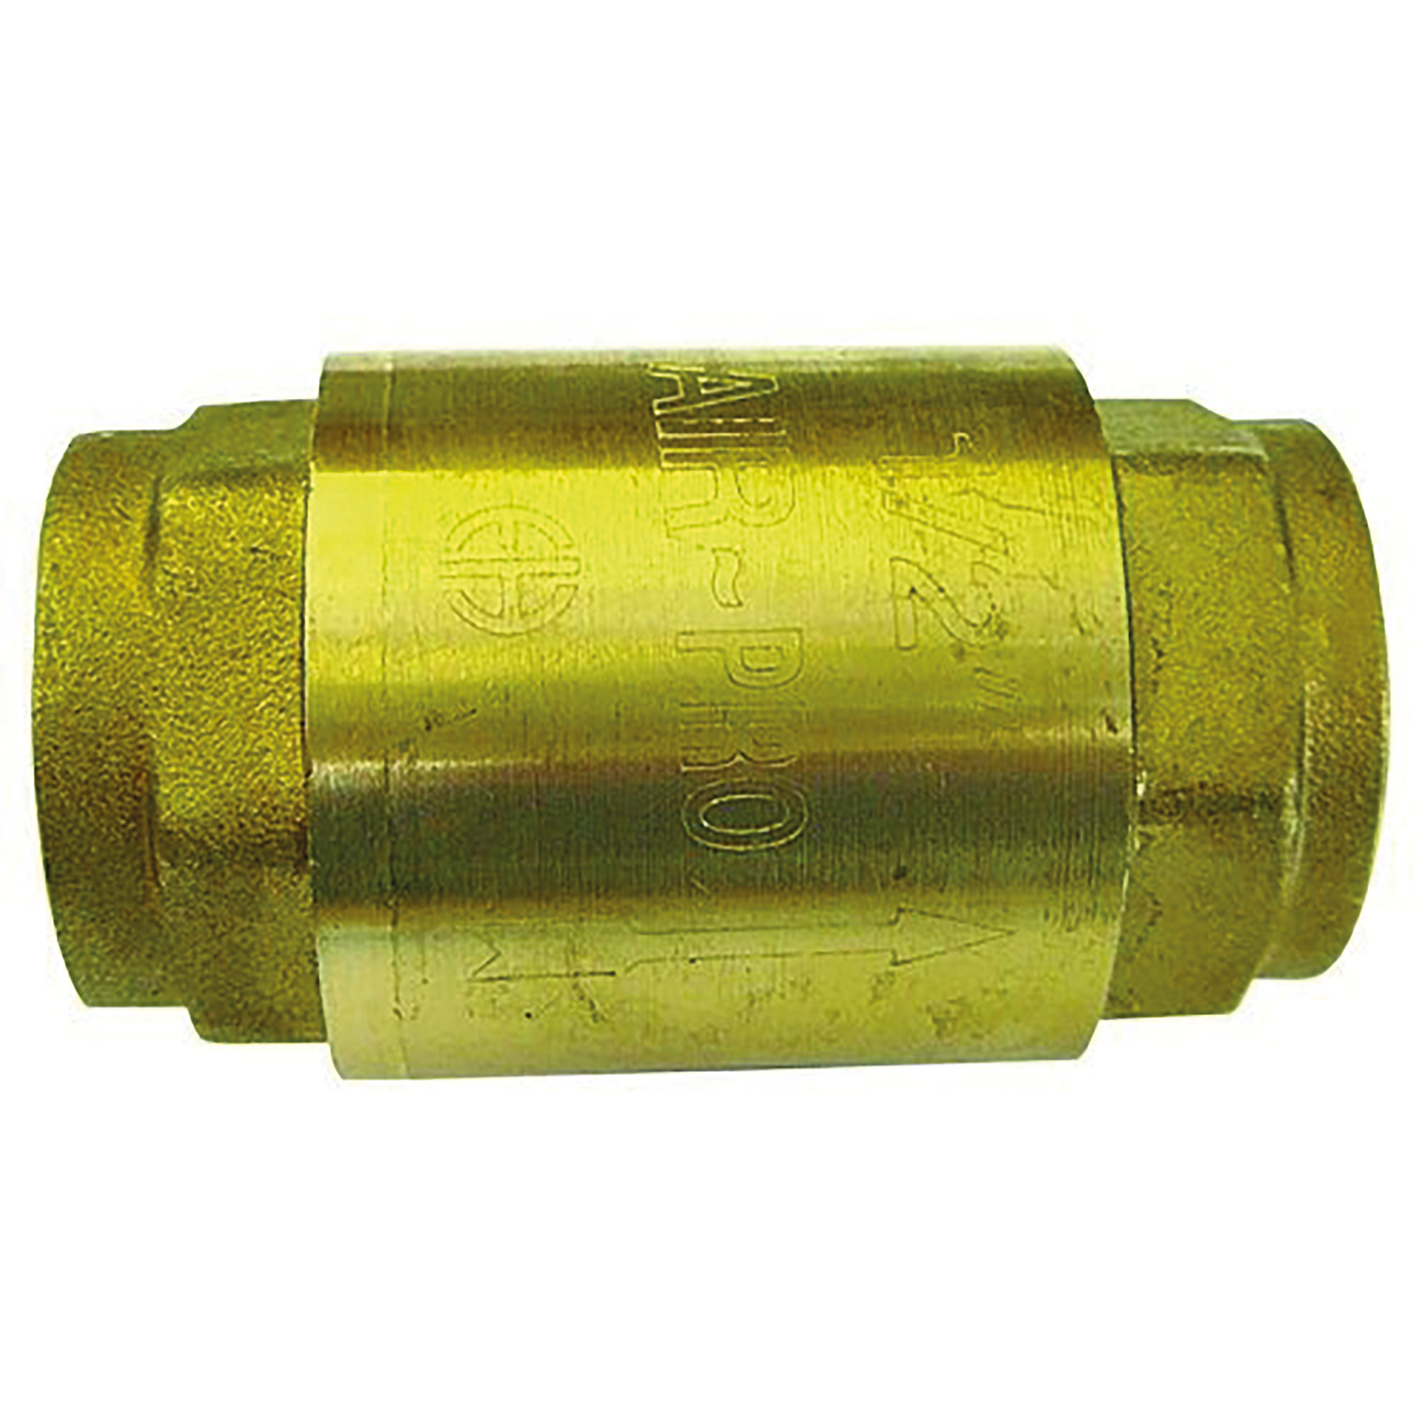 1/4" BSPP Female check valve